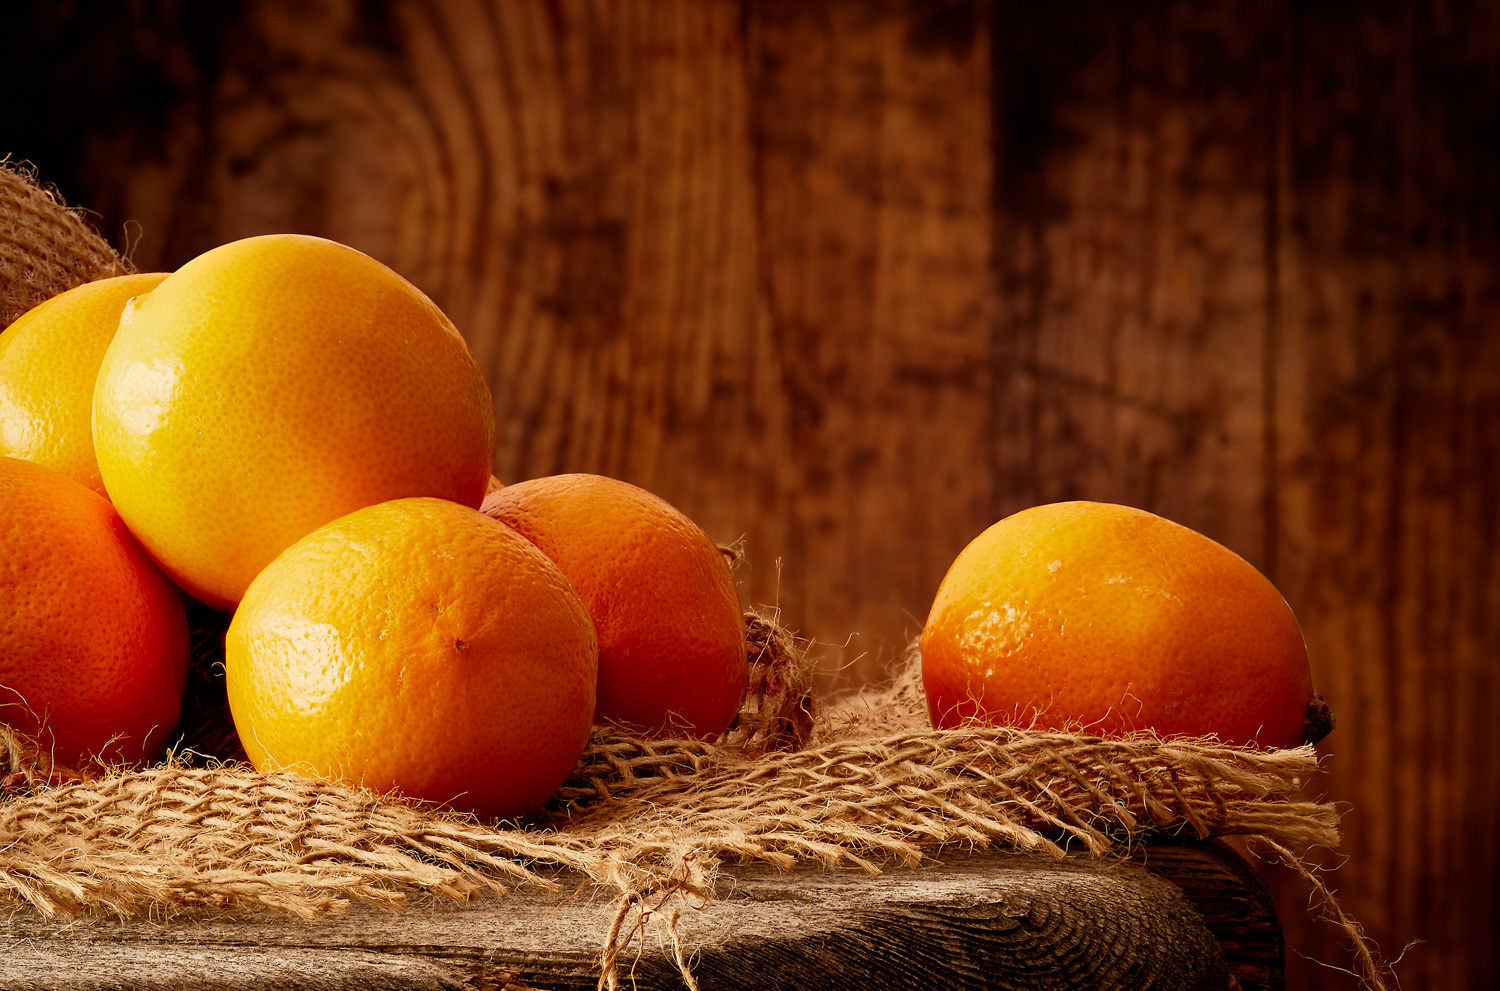 4-rustic-fruit-oranges-produce-food-snack-composition-product-photography-local-sunlight-buy-advertising-image-professional-photographer-daniel-buehler-danbcreative-wood-barn-marketing-studio.jpg